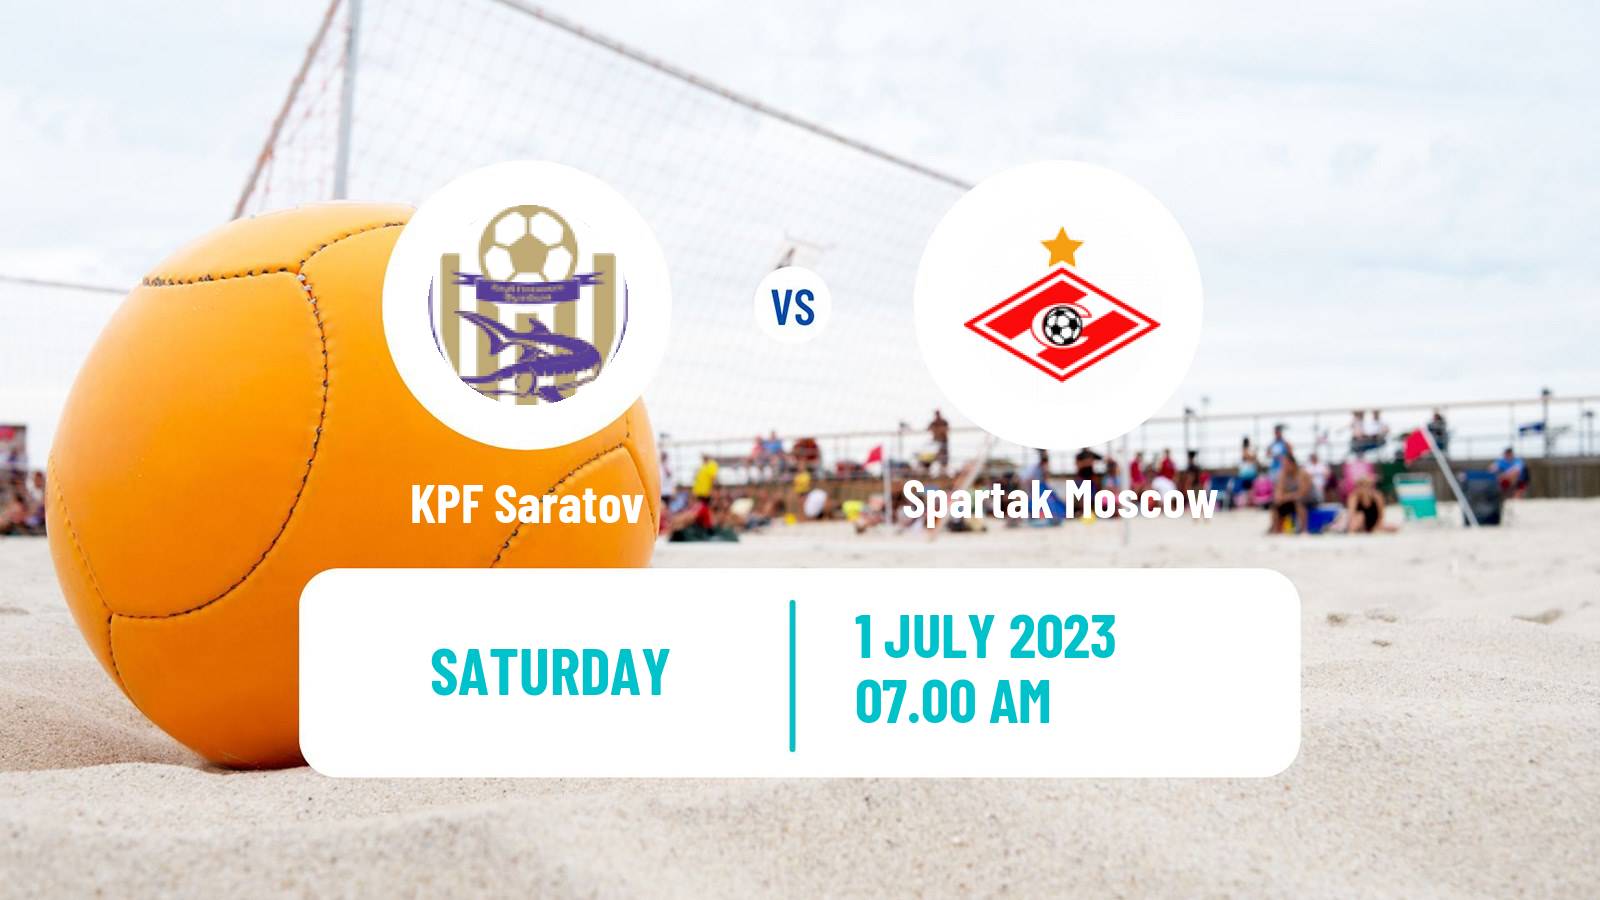 Beach soccer Superliga KPF Saratov - Spartak Moscow